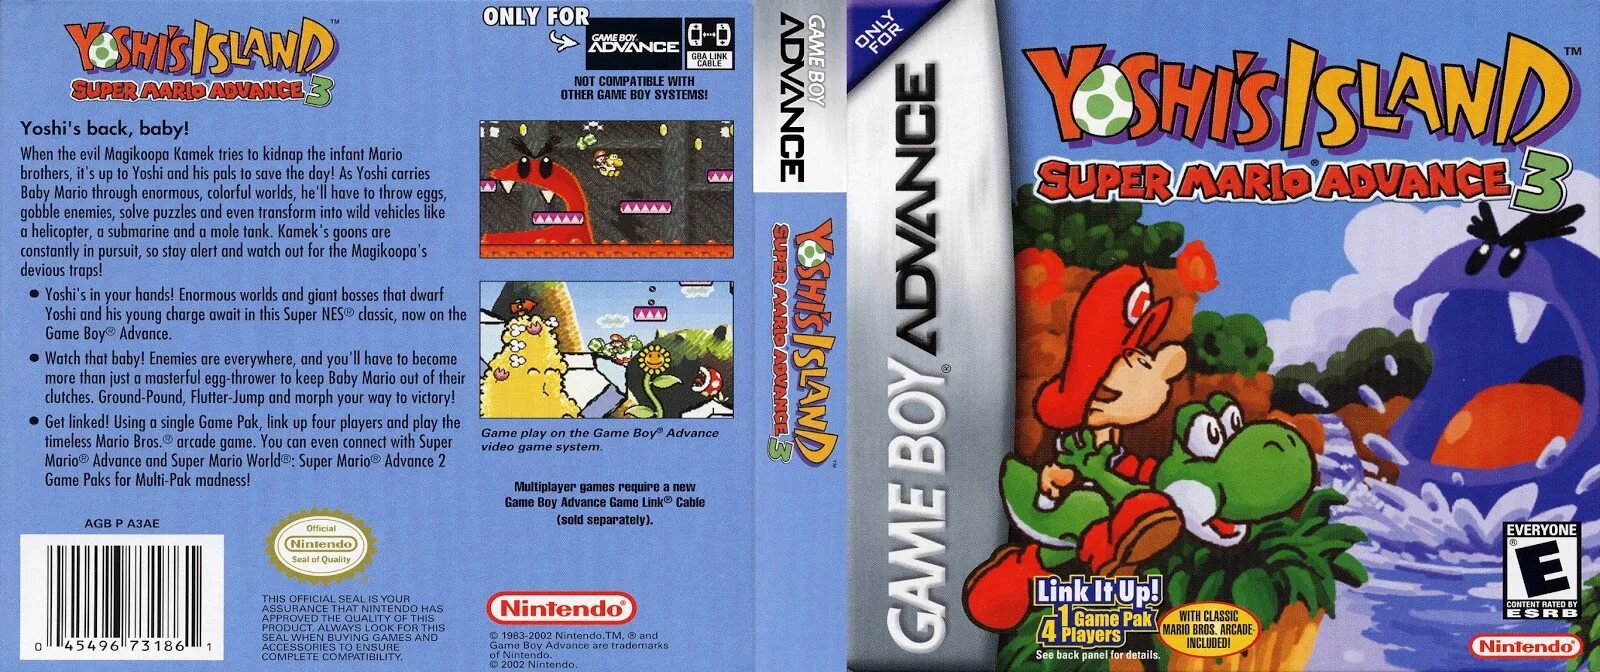 Mario bros advance. Super Mario Advance 3 - Yoshi's Island GBA. GBA super Mario Advance 3. Super Mario World 2 - Yoshi's Island Snes. GBA: super Mario Advance Cover.